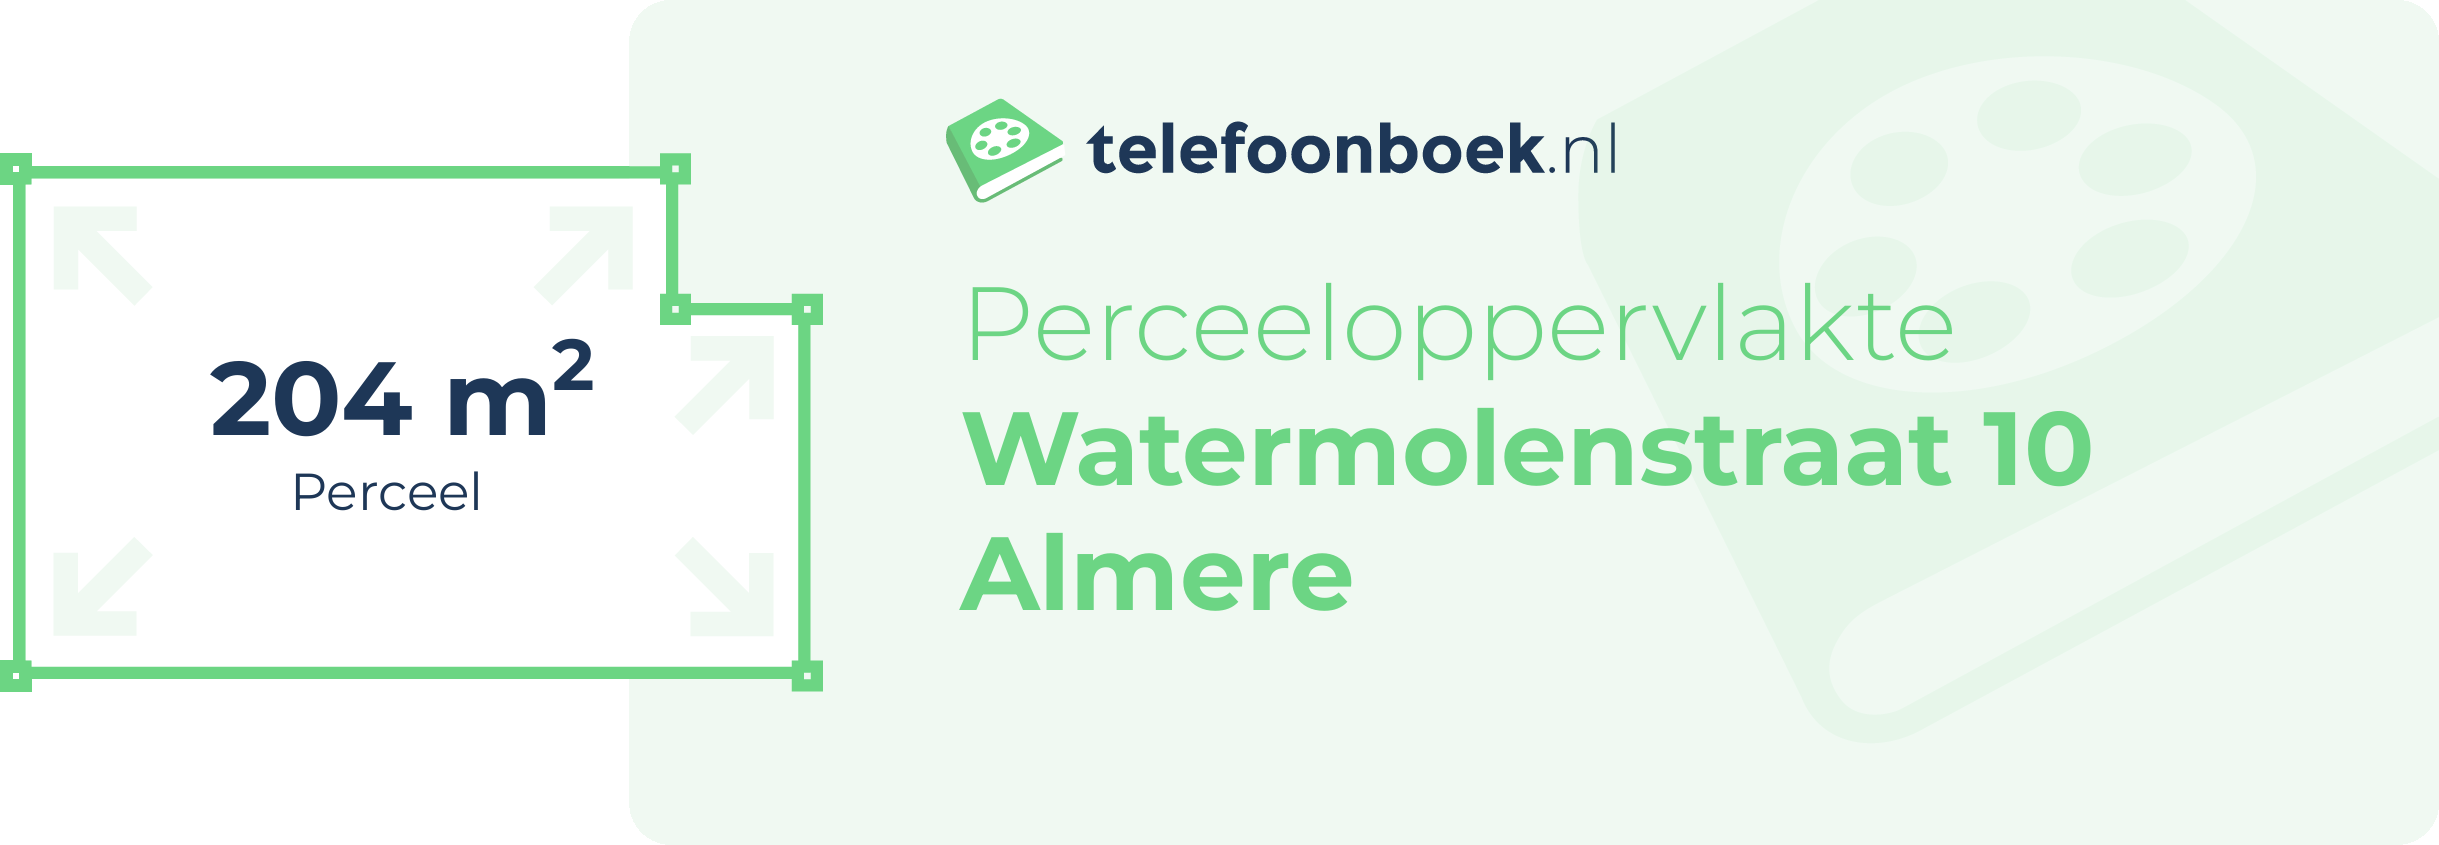 Perceeloppervlakte Watermolenstraat 10 Almere